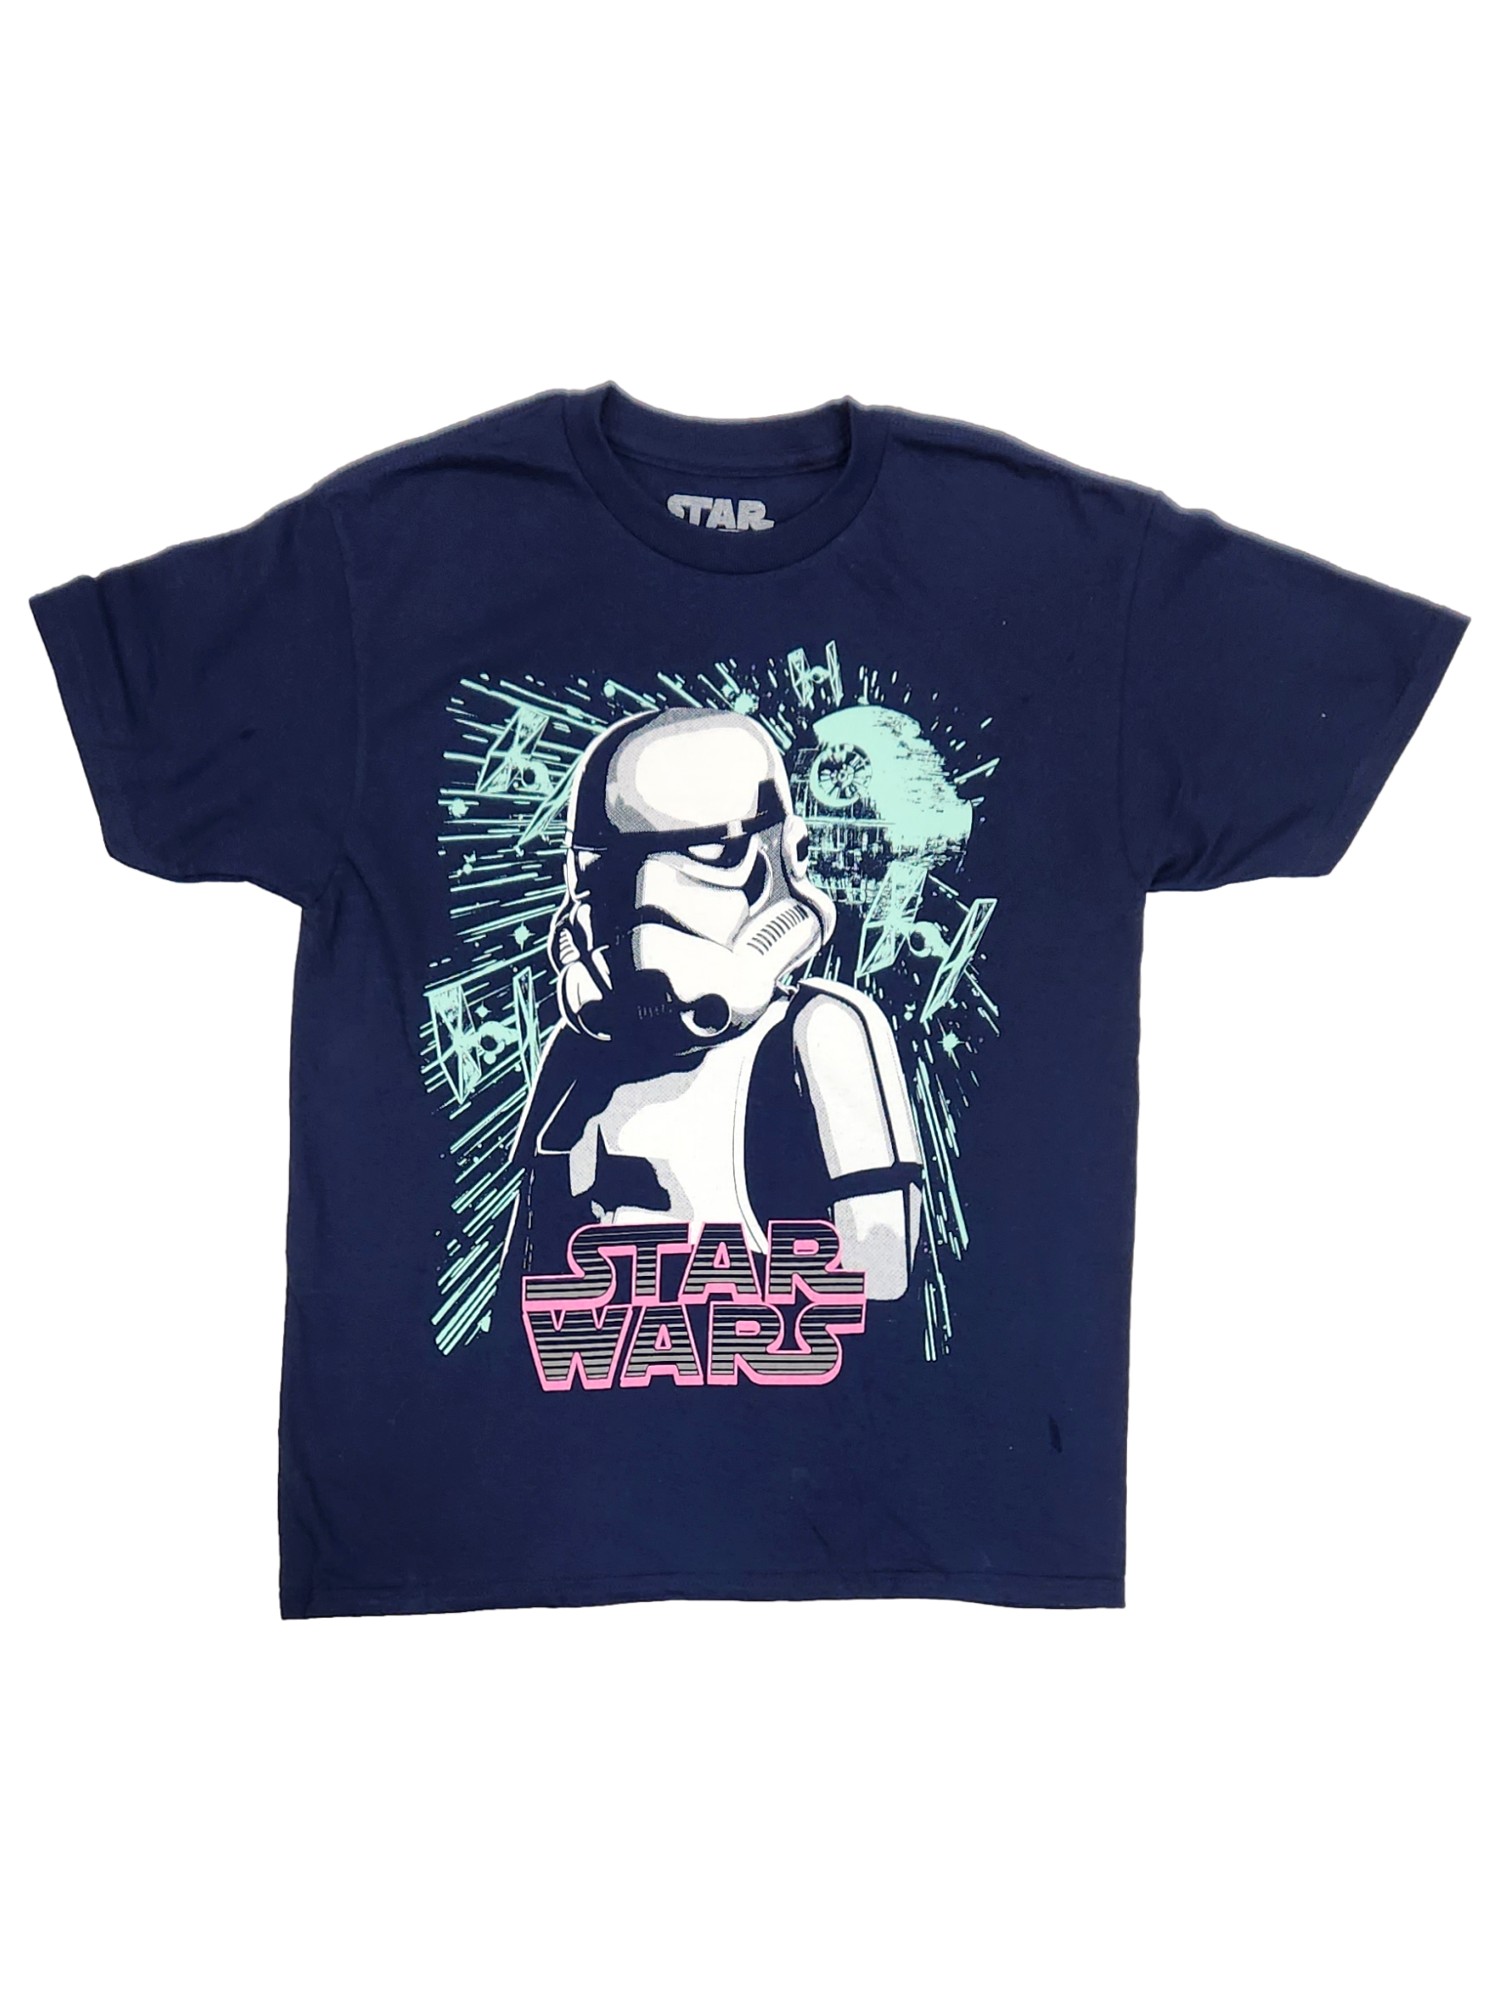 Star Wars Boys Blue Short Sleeved Storm Trooper T-Shirt Tee Shirt XL 14-16